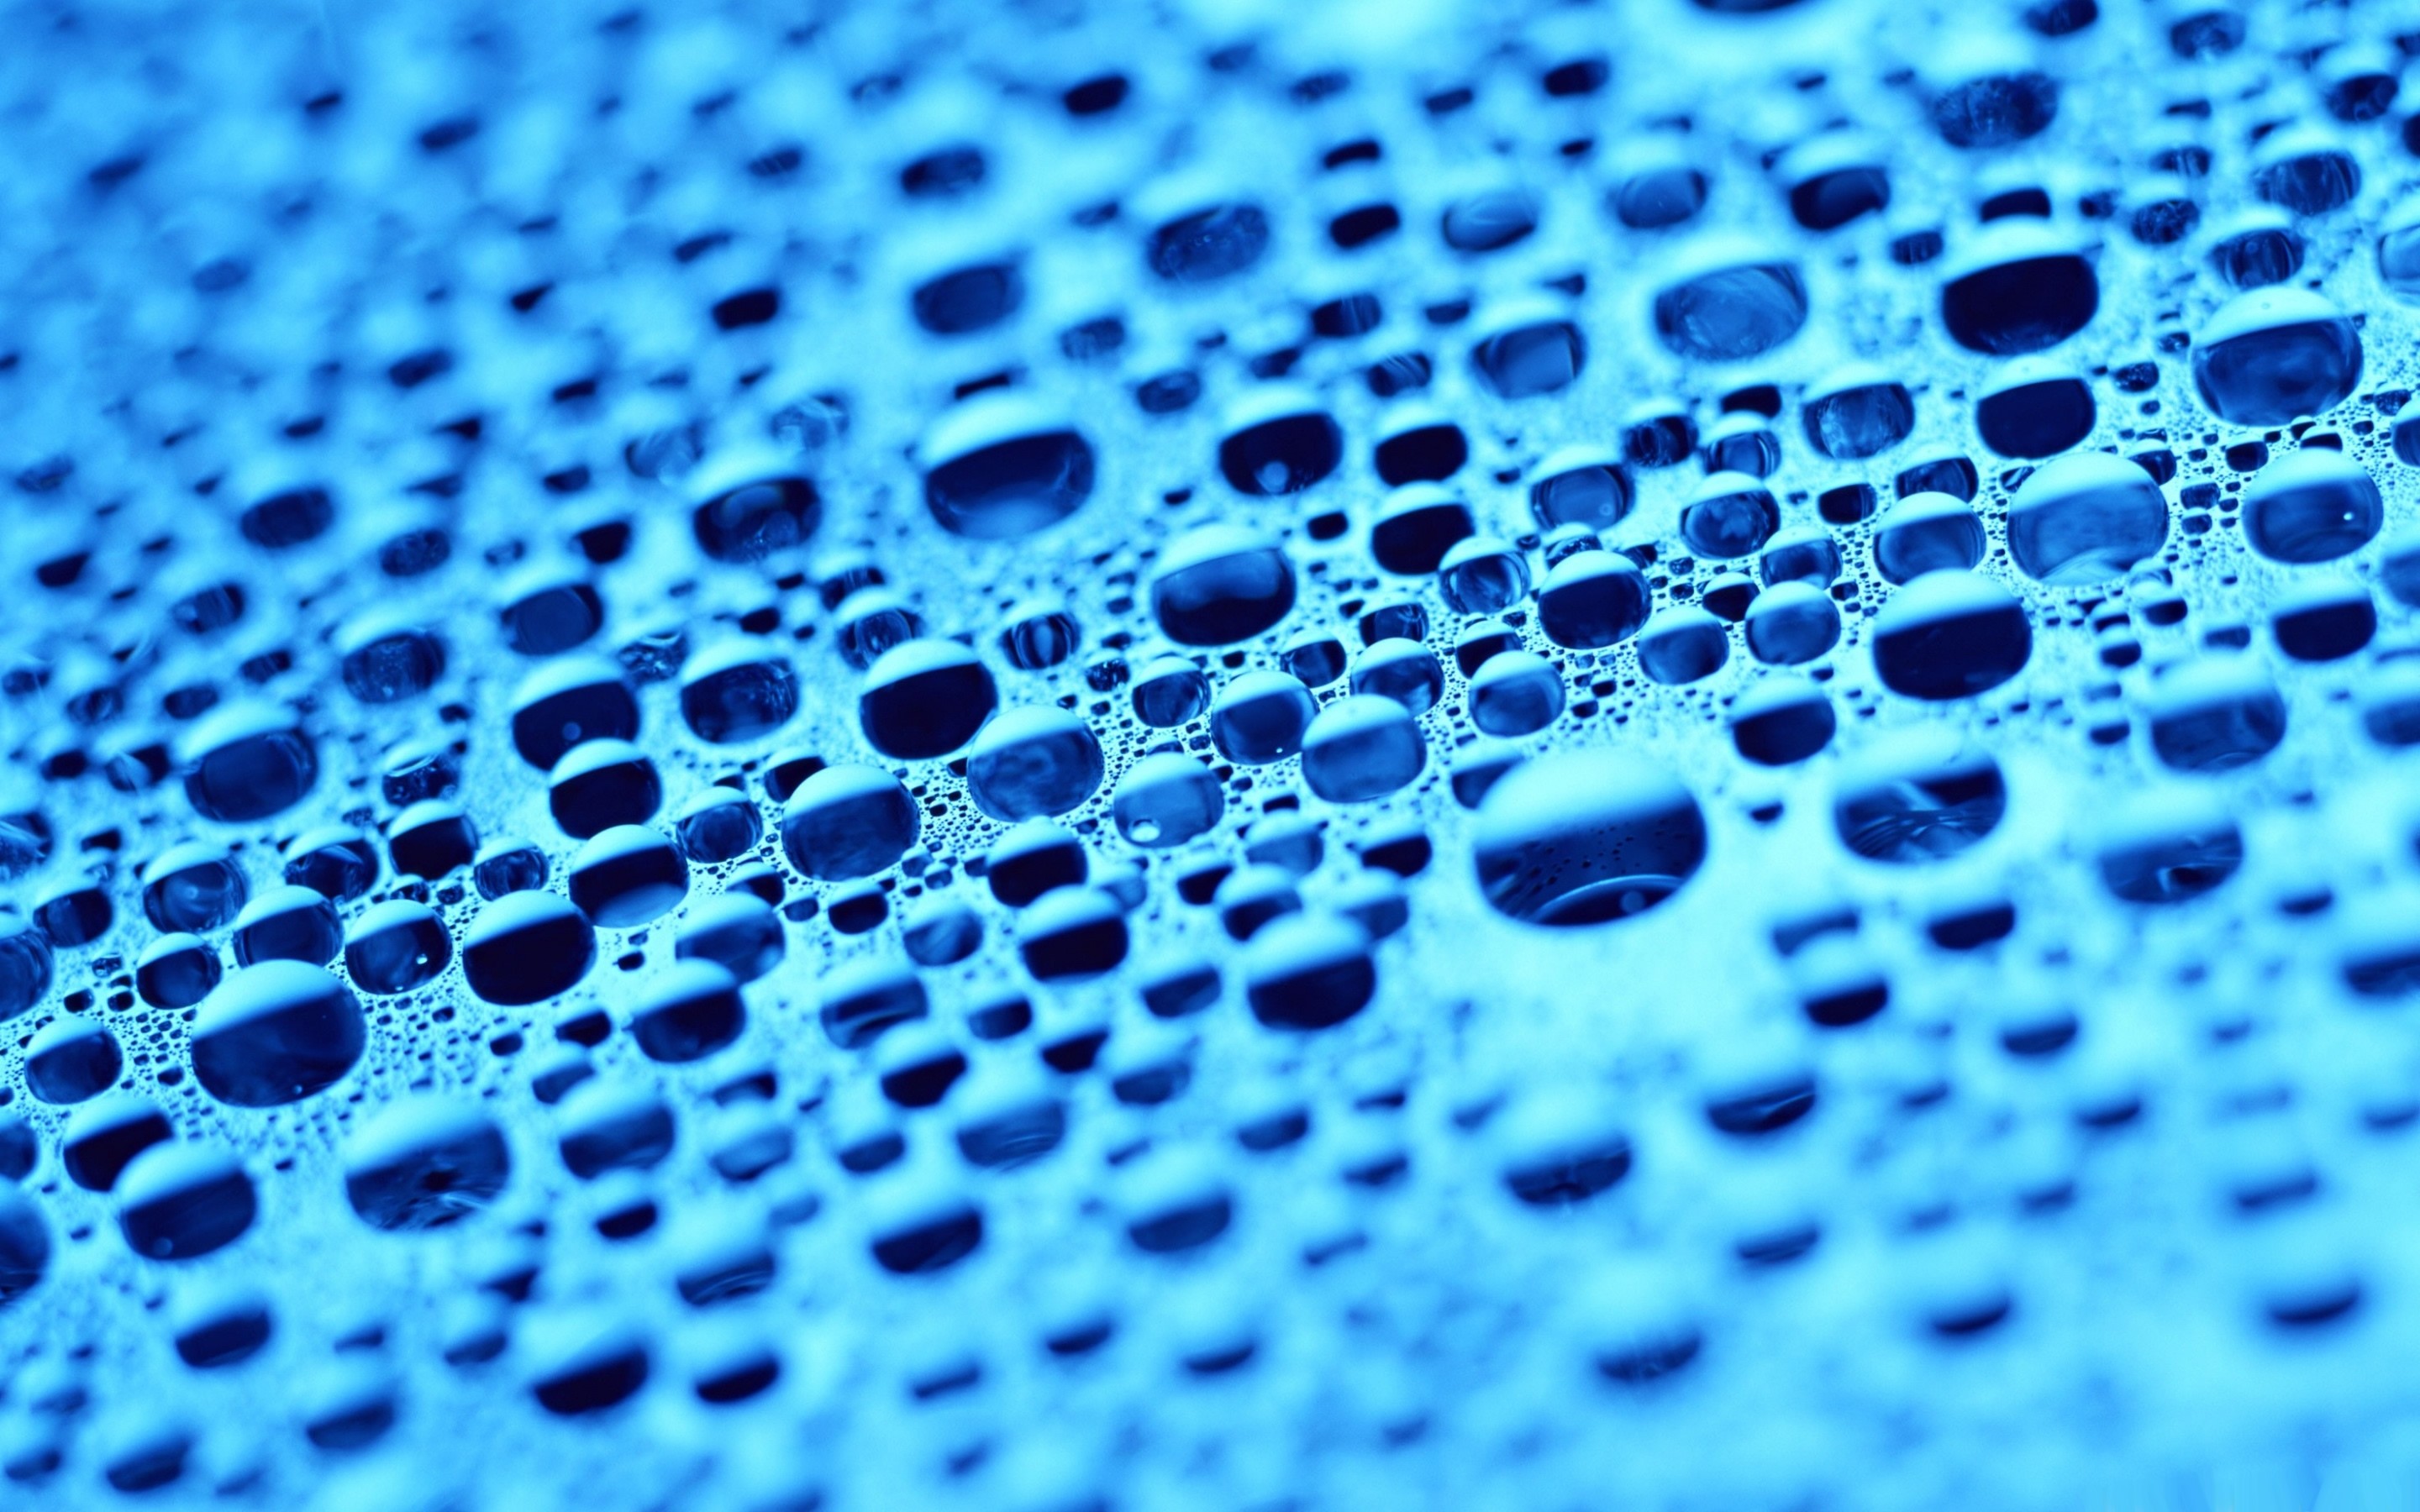 Wet Blue Surface Mac Wallpaper Download | Free Mac Wallpapers Download